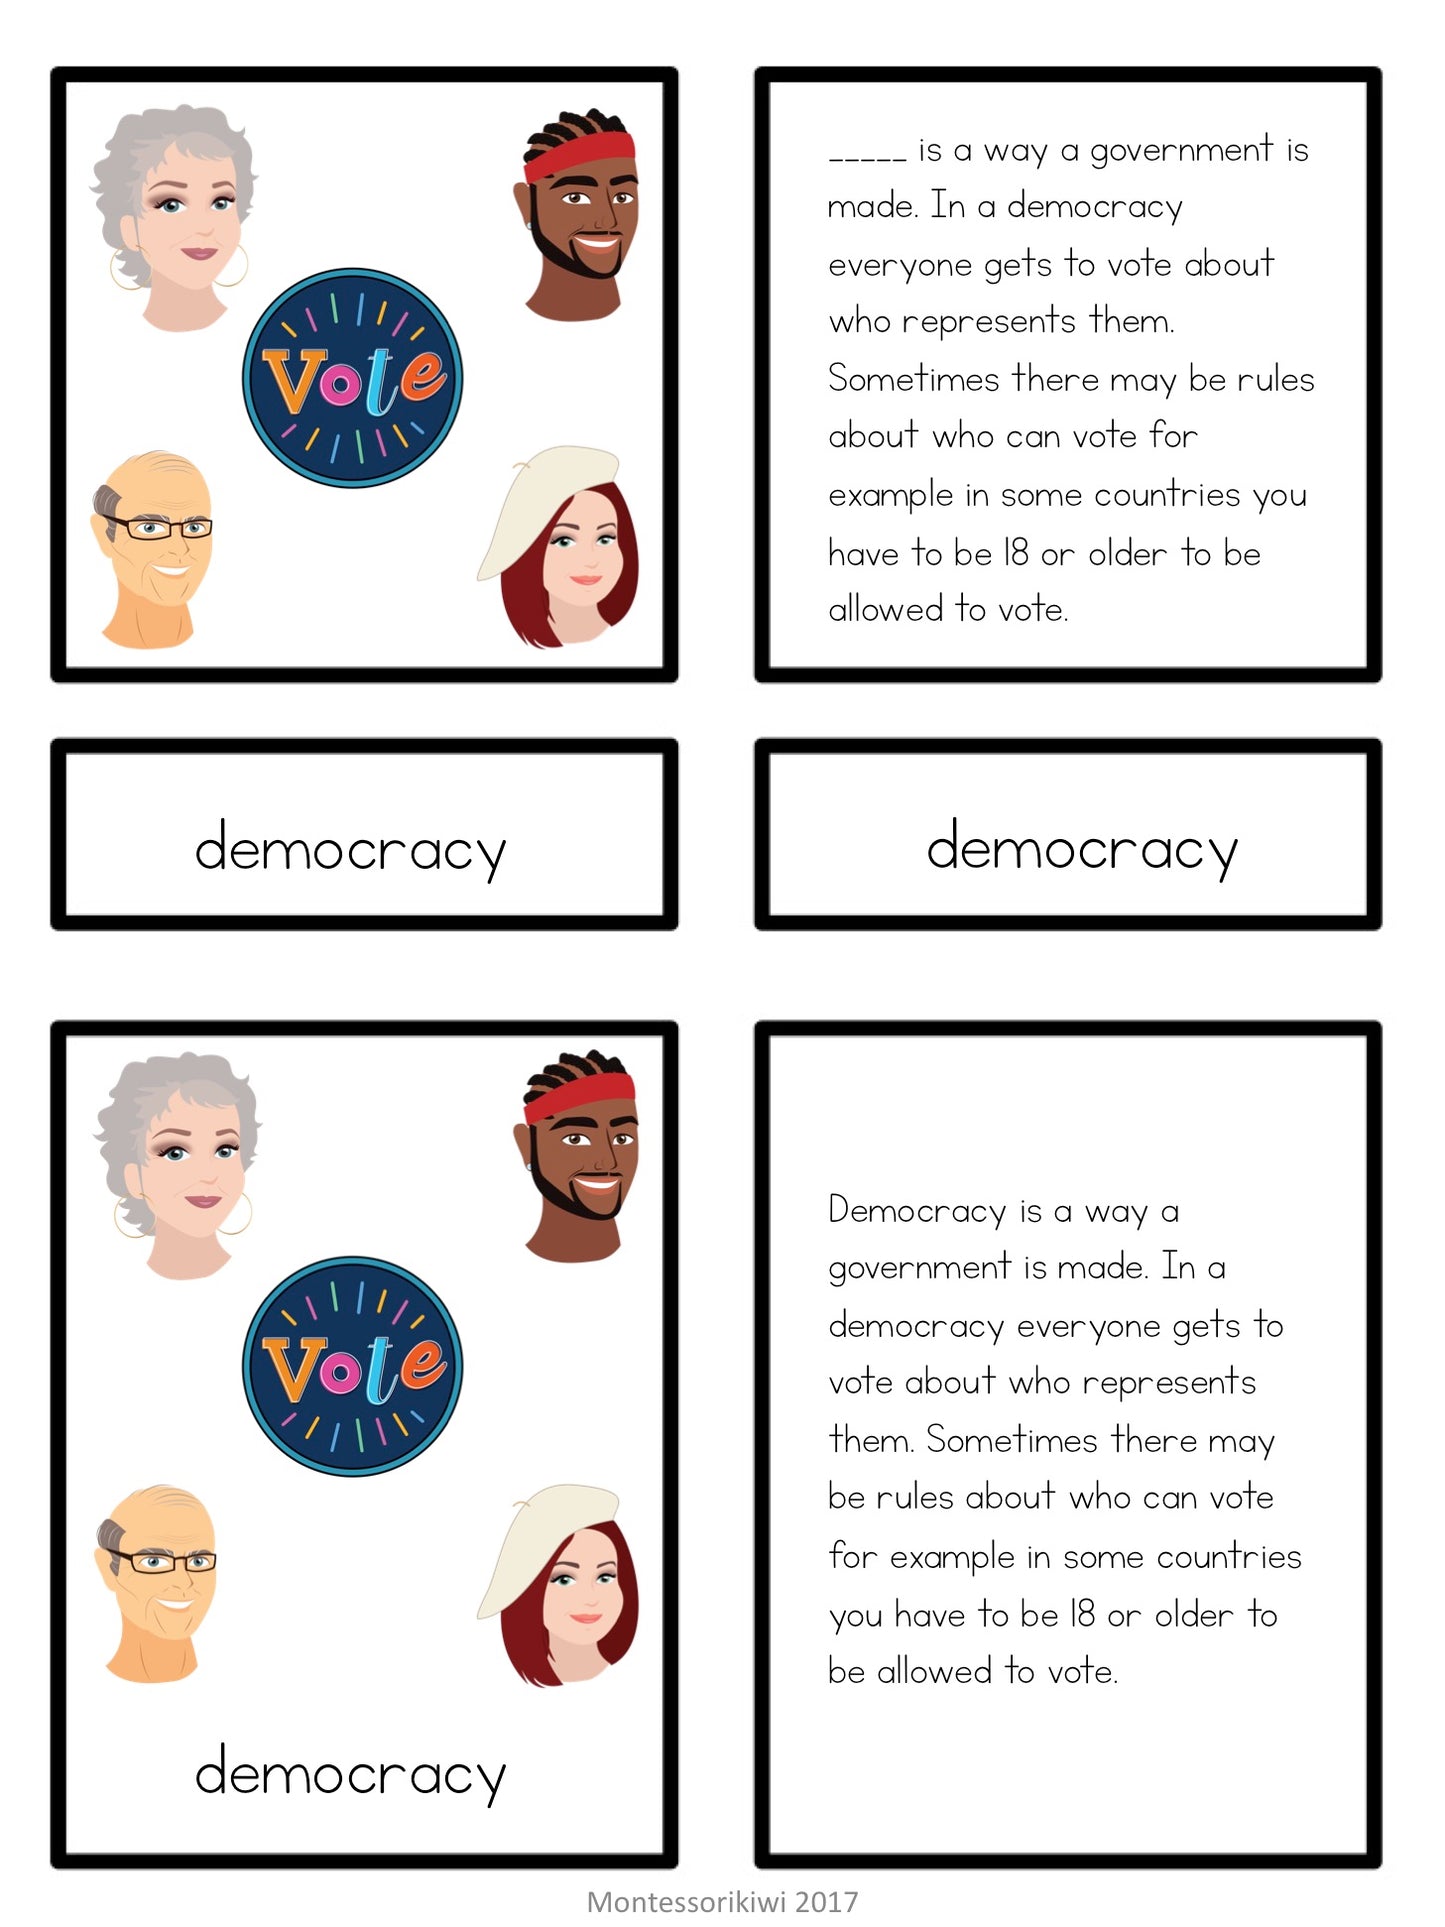 Election words vocabulary - montessorikiwi